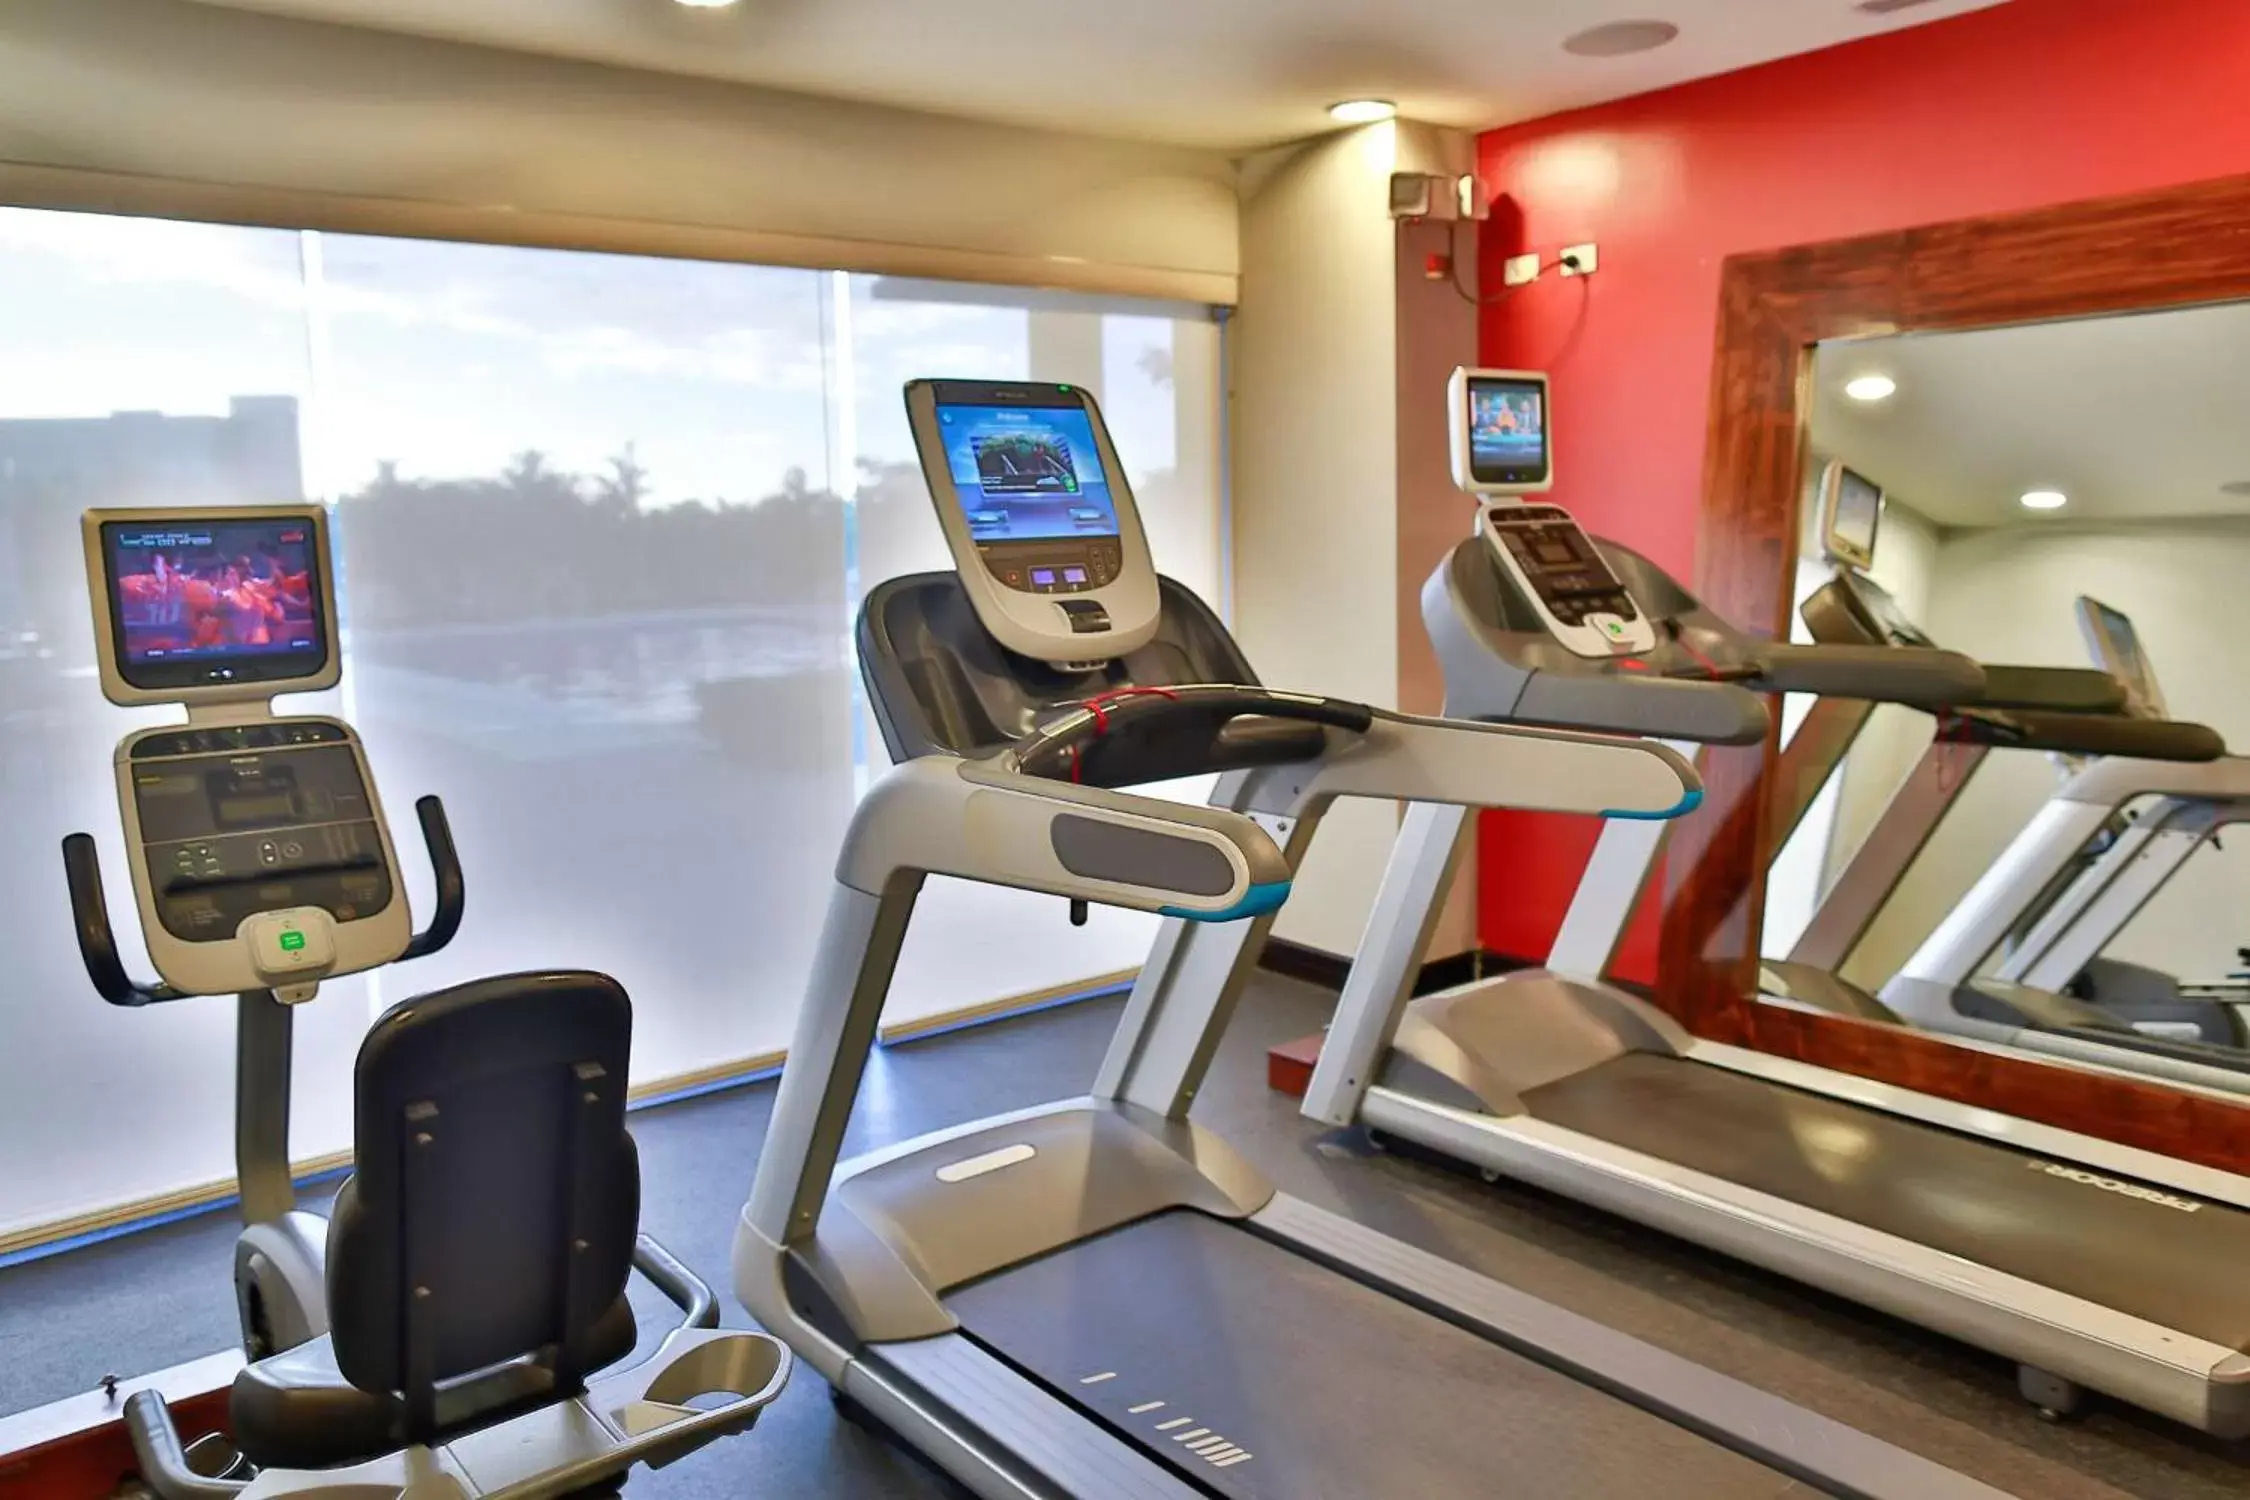 Fitness centre/facilities, Fitness Center/Facilities in Hilton Garden Inn Guanacaste Airport